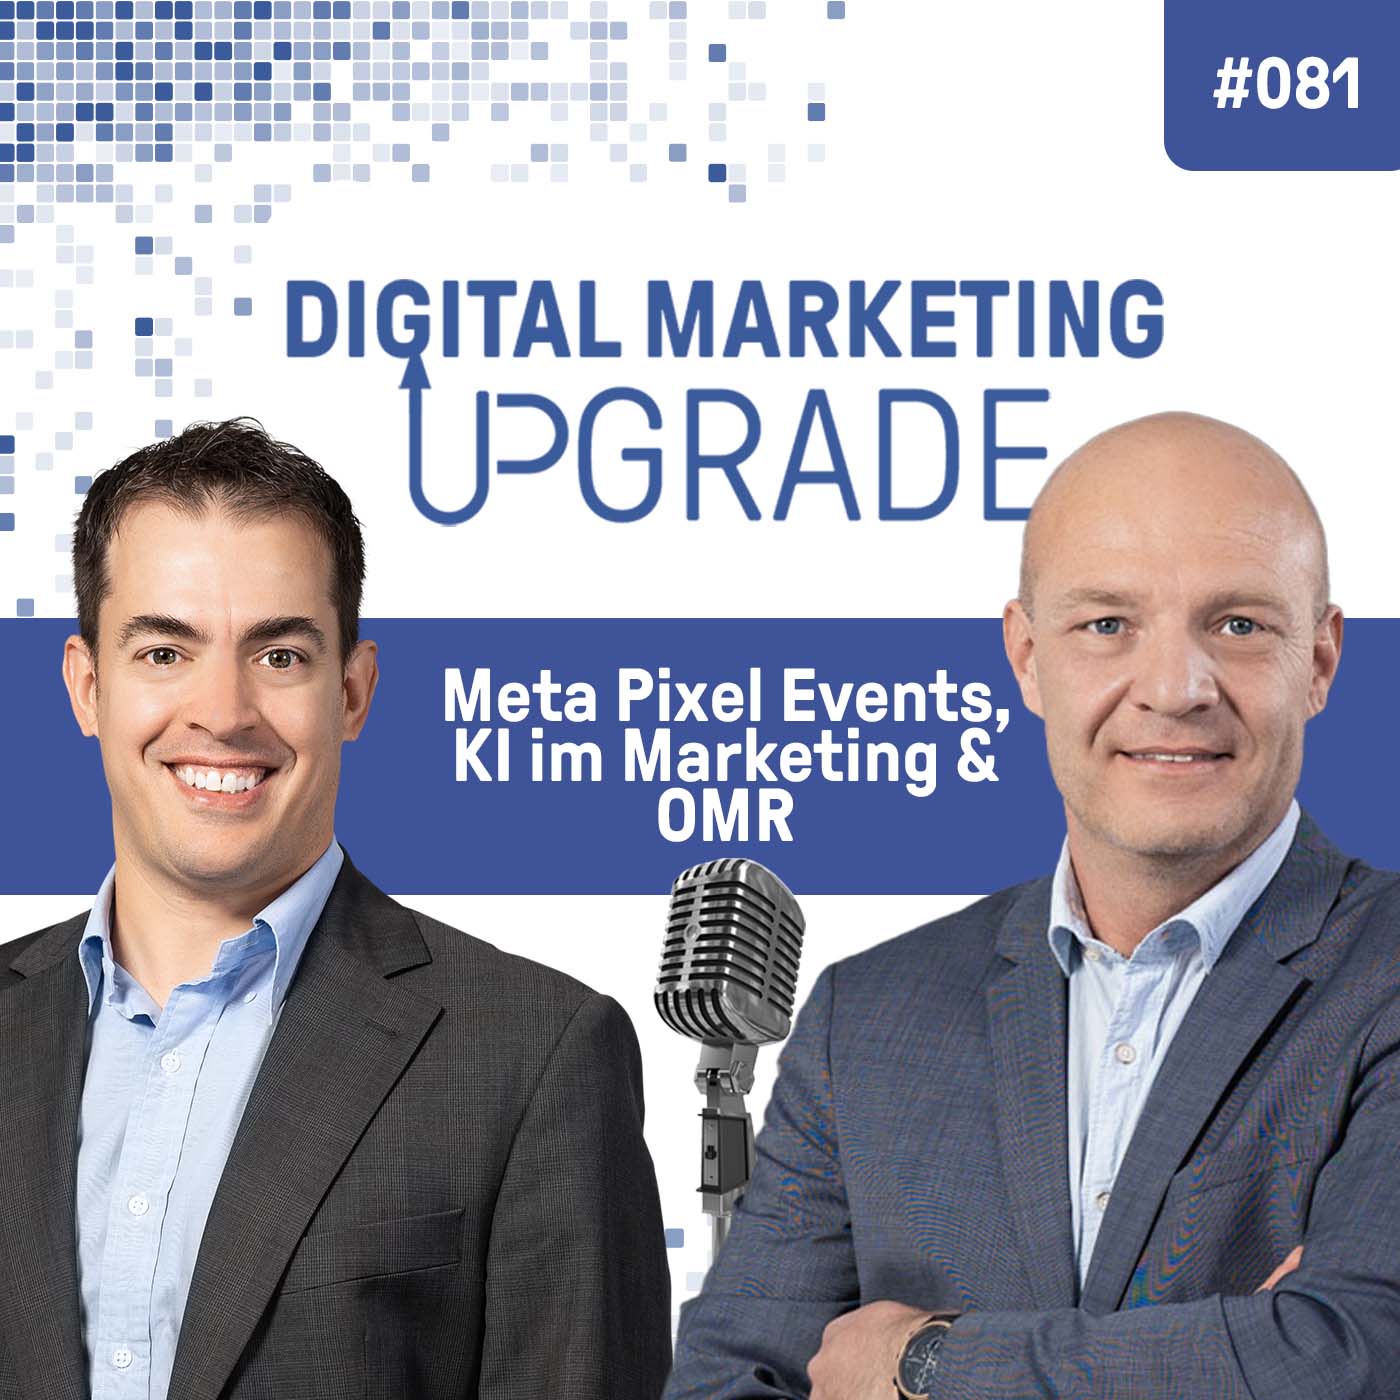 Meta Pixel Events, KI im Marketing und OMR - mit Thomas Hutter #081